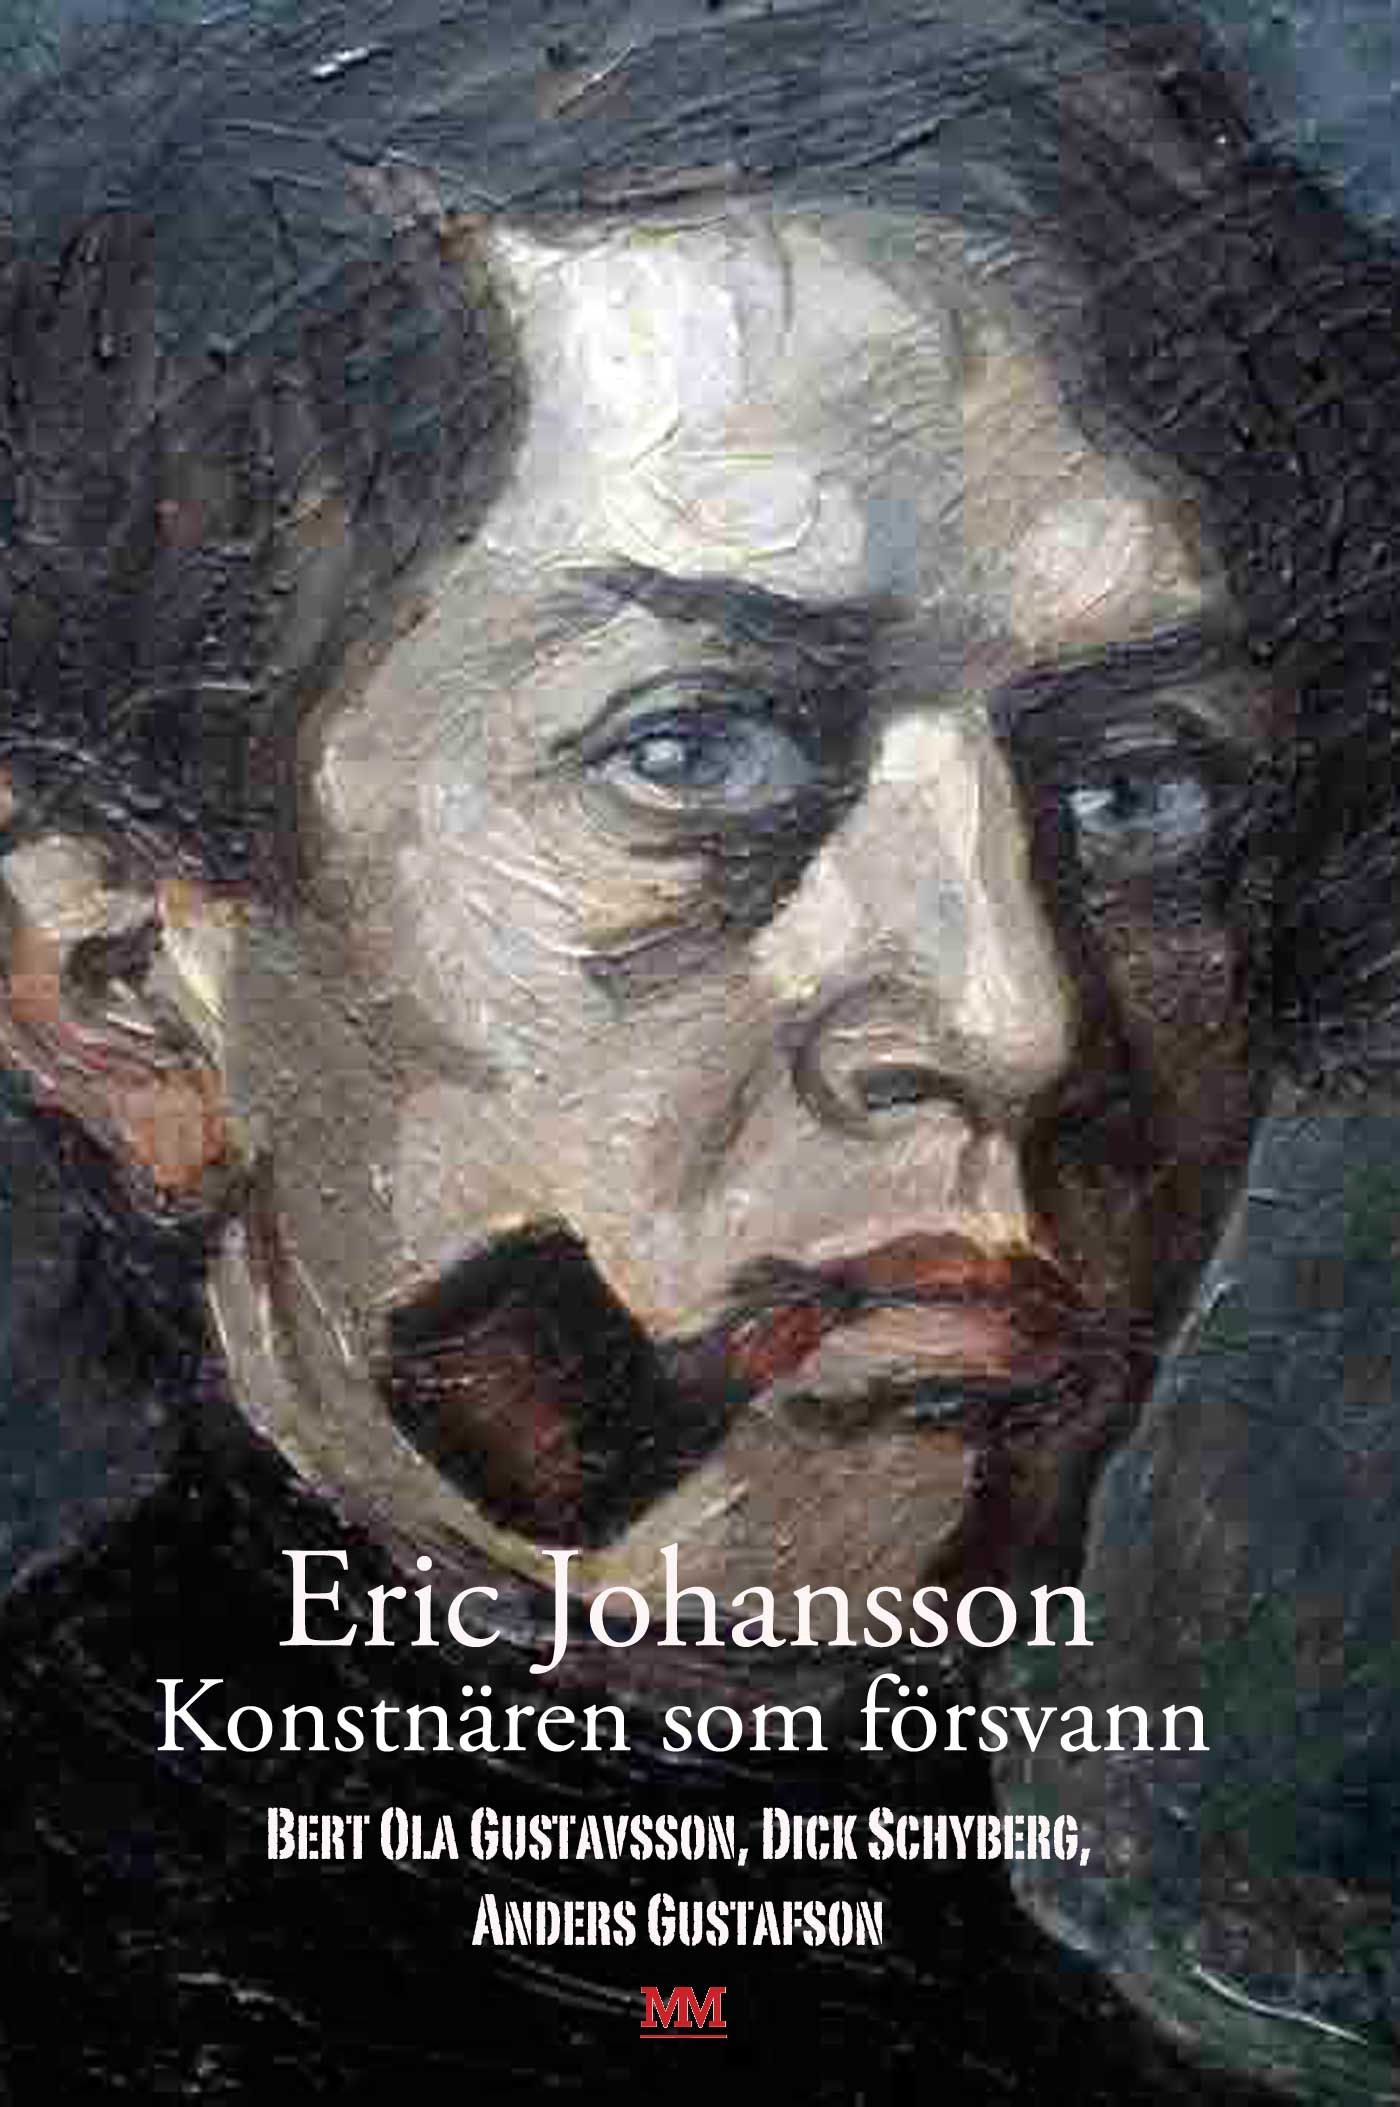 Eric Johansson - konstnären som försvann, e-bog af Anders Gustafson, Bert Ola Gustavsson, Dick Schyberg